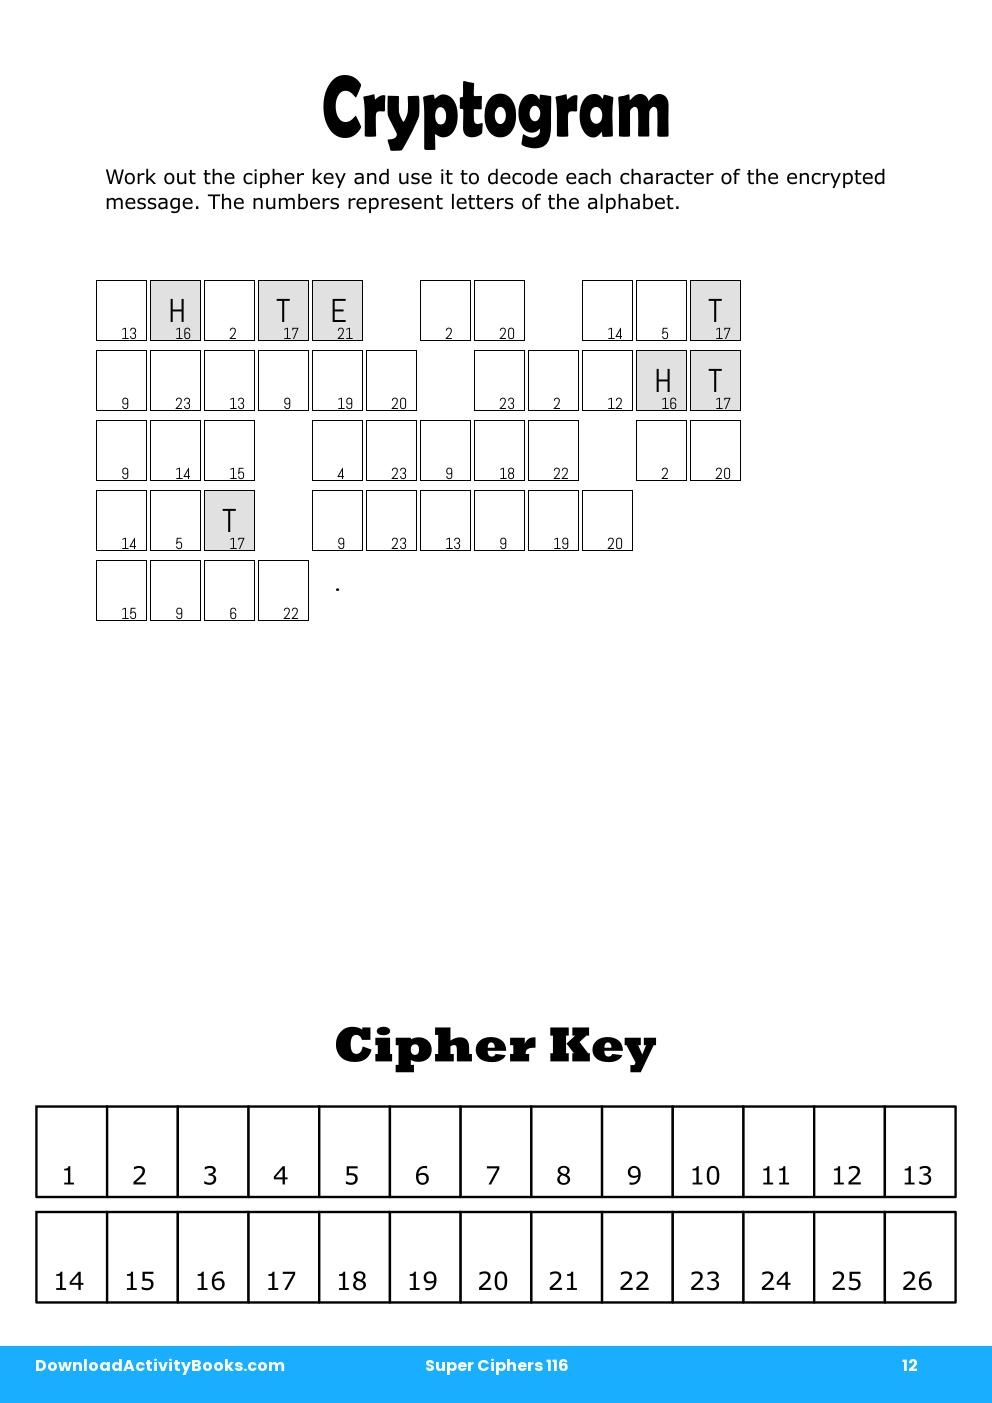 Cryptogram in Super Ciphers 116